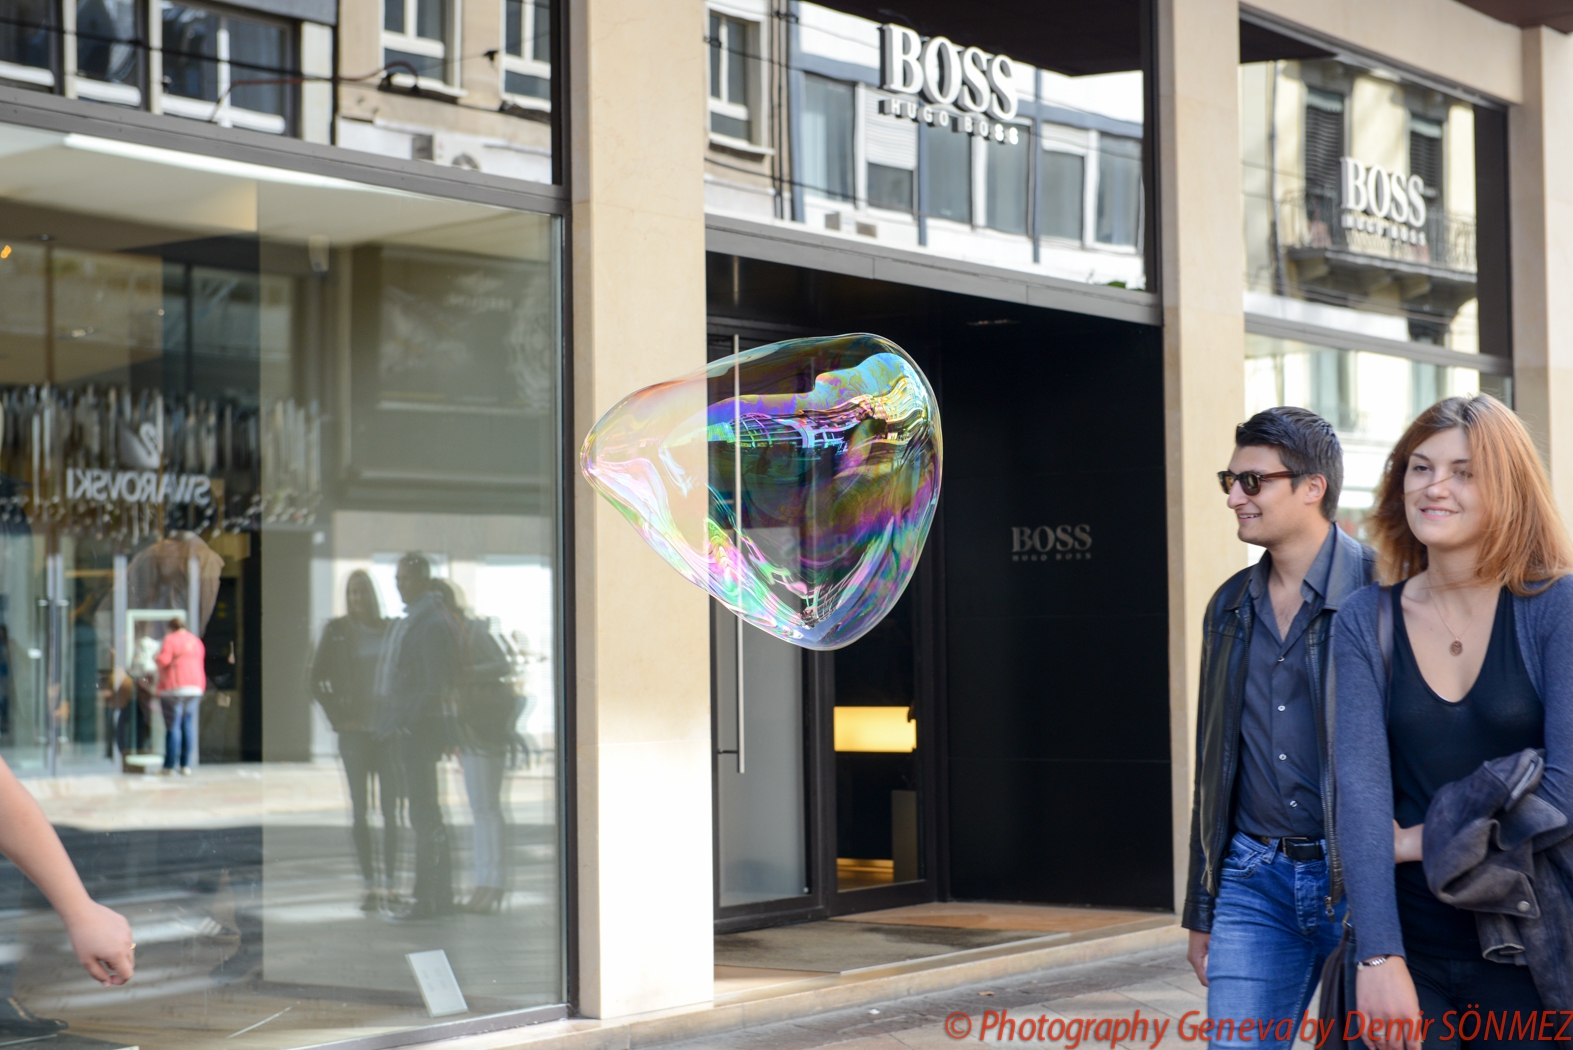 Les bulles  de savon dans  les rues basses-0044.jpg